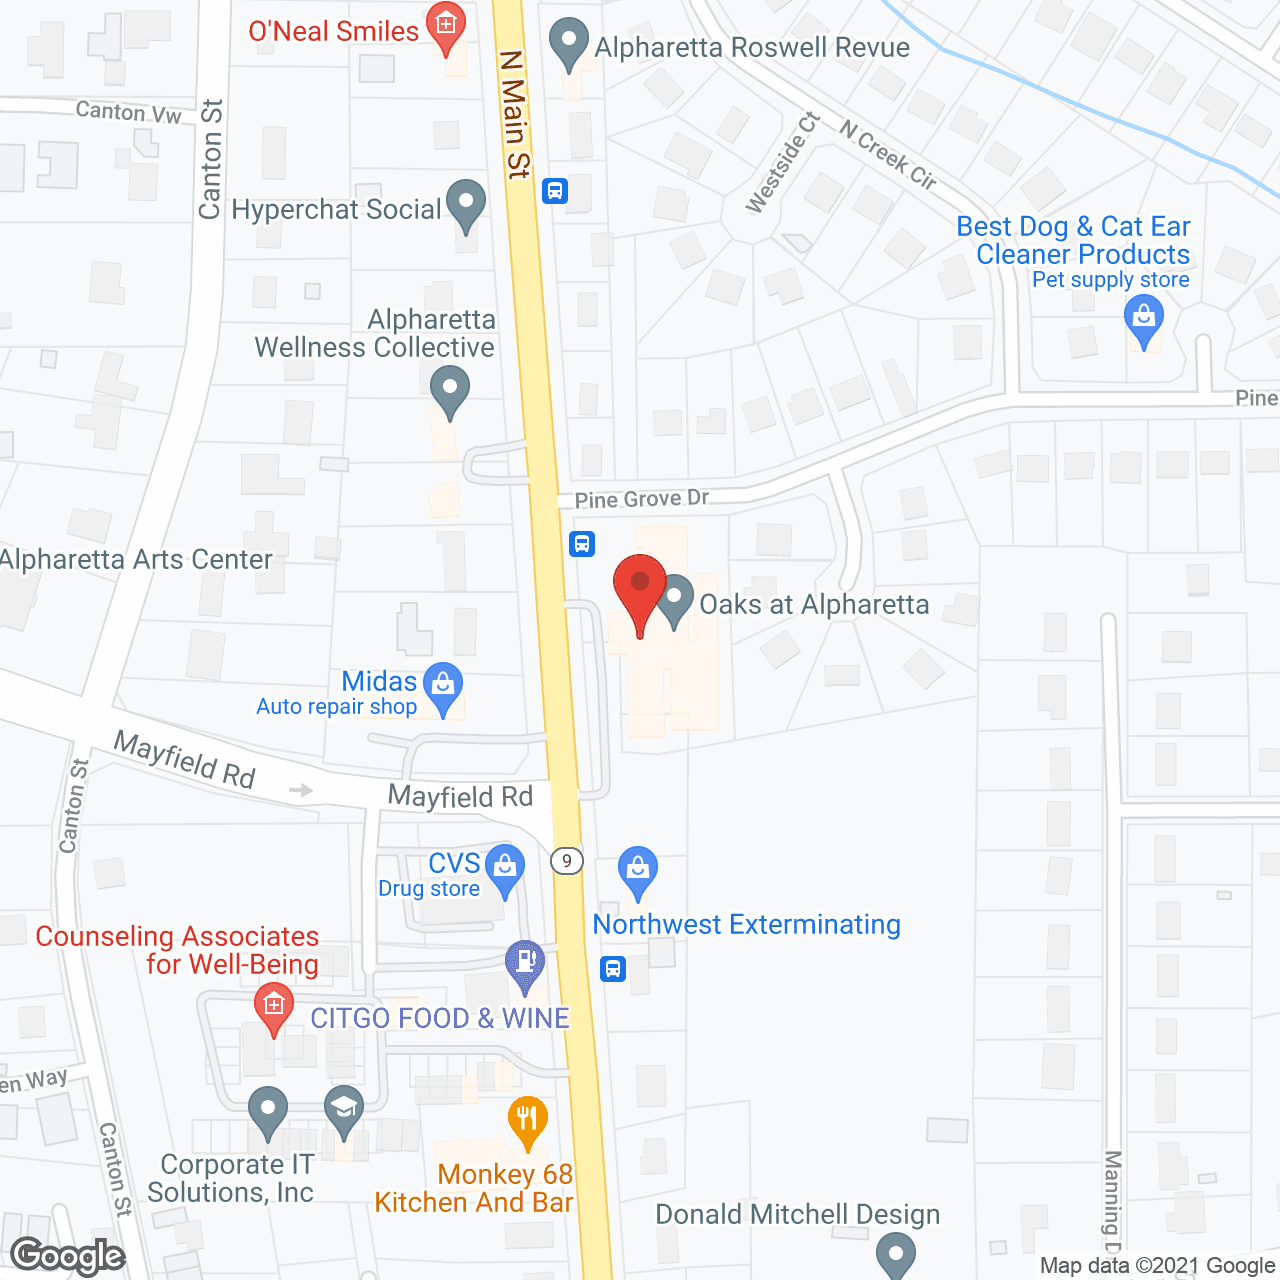 Oaks at Alpharetta in google map